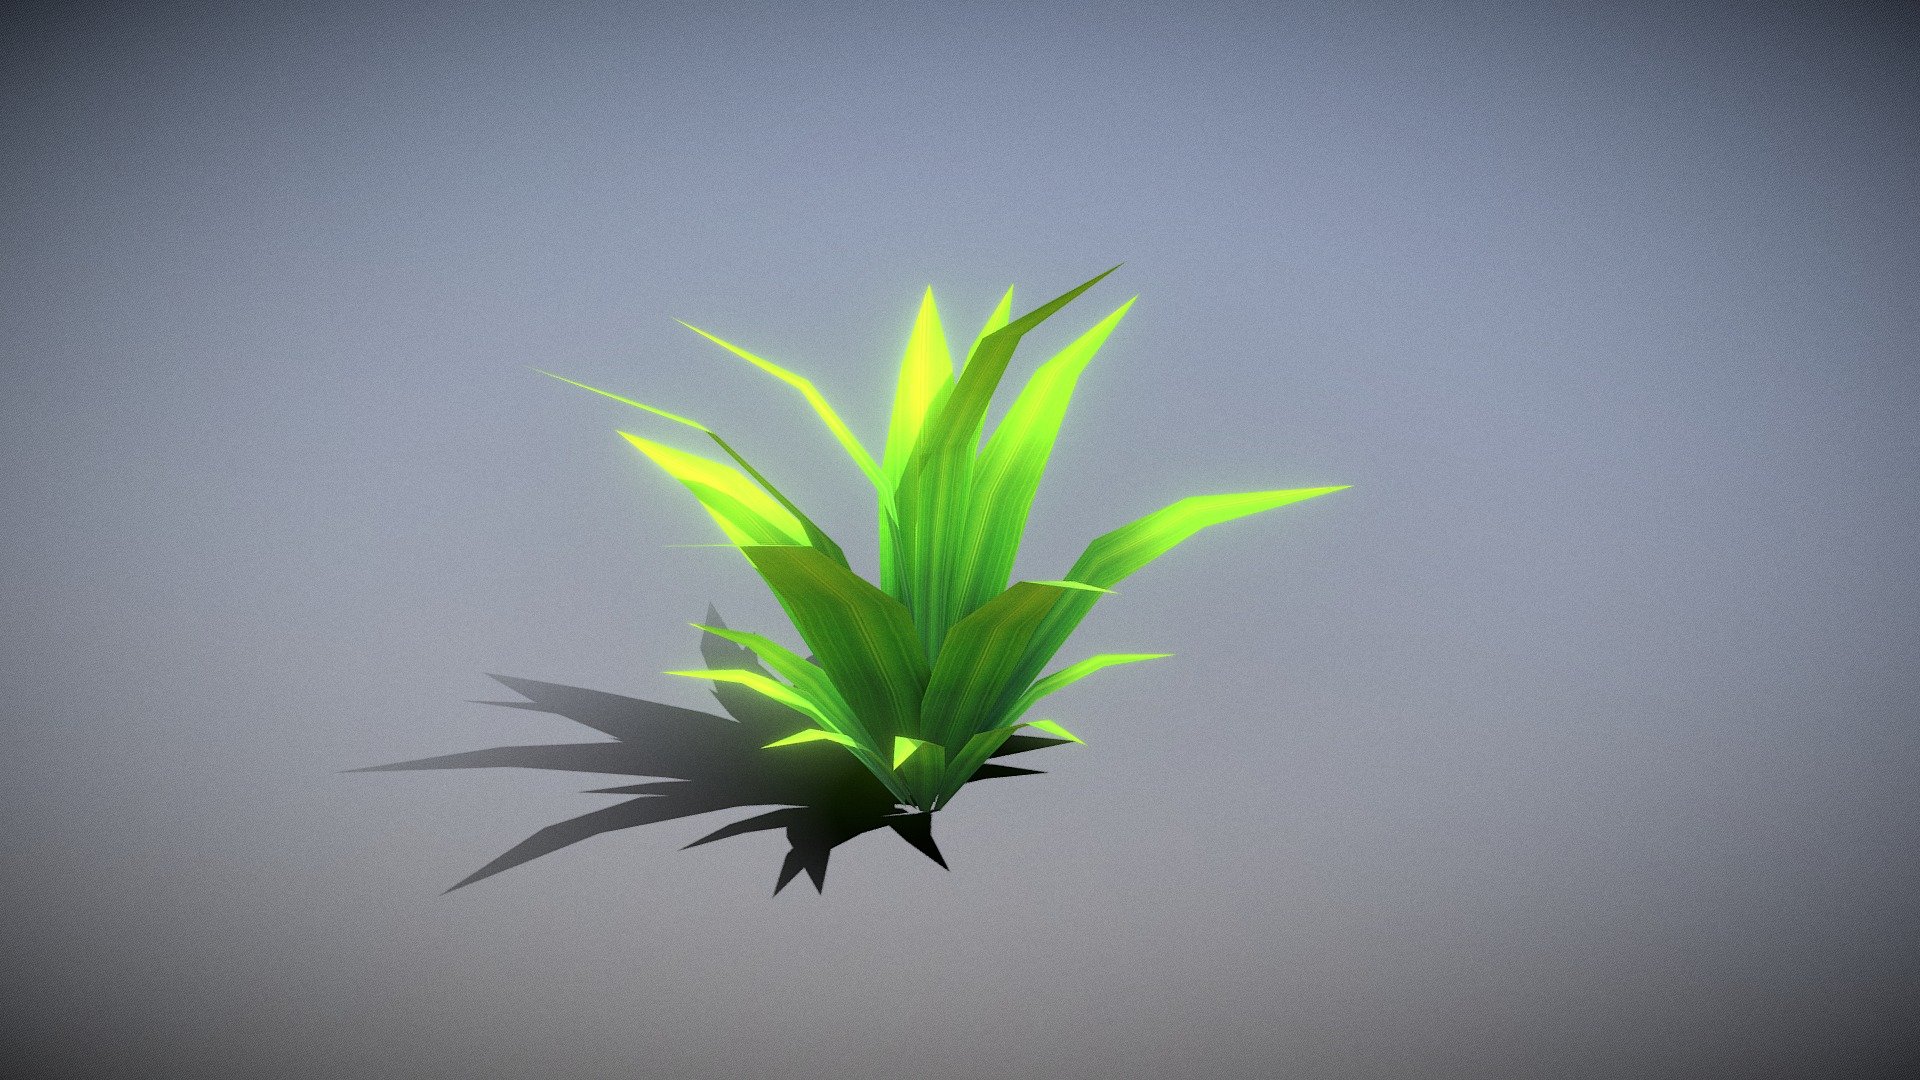 Grass game model - Grass01 - 3D model by Chushoga Productions (@chushoga) 3d model